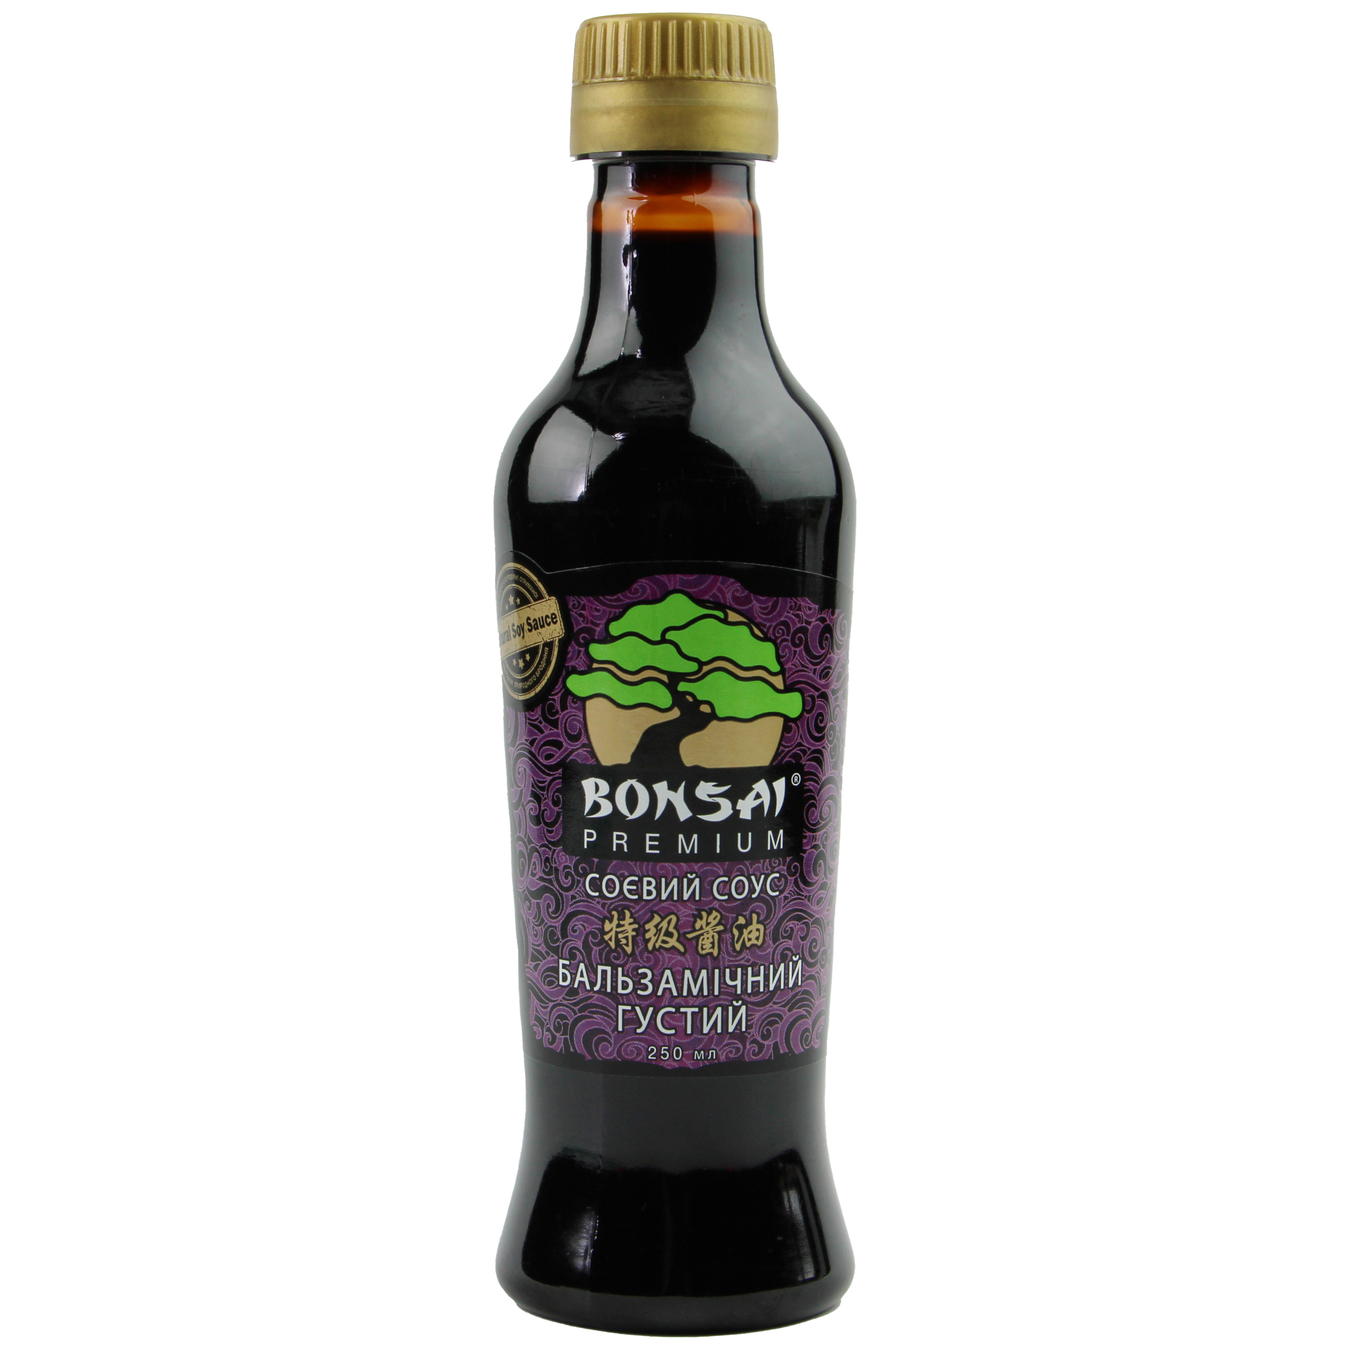 Bonsai Premium Salsamic Soya Sauce 250ml